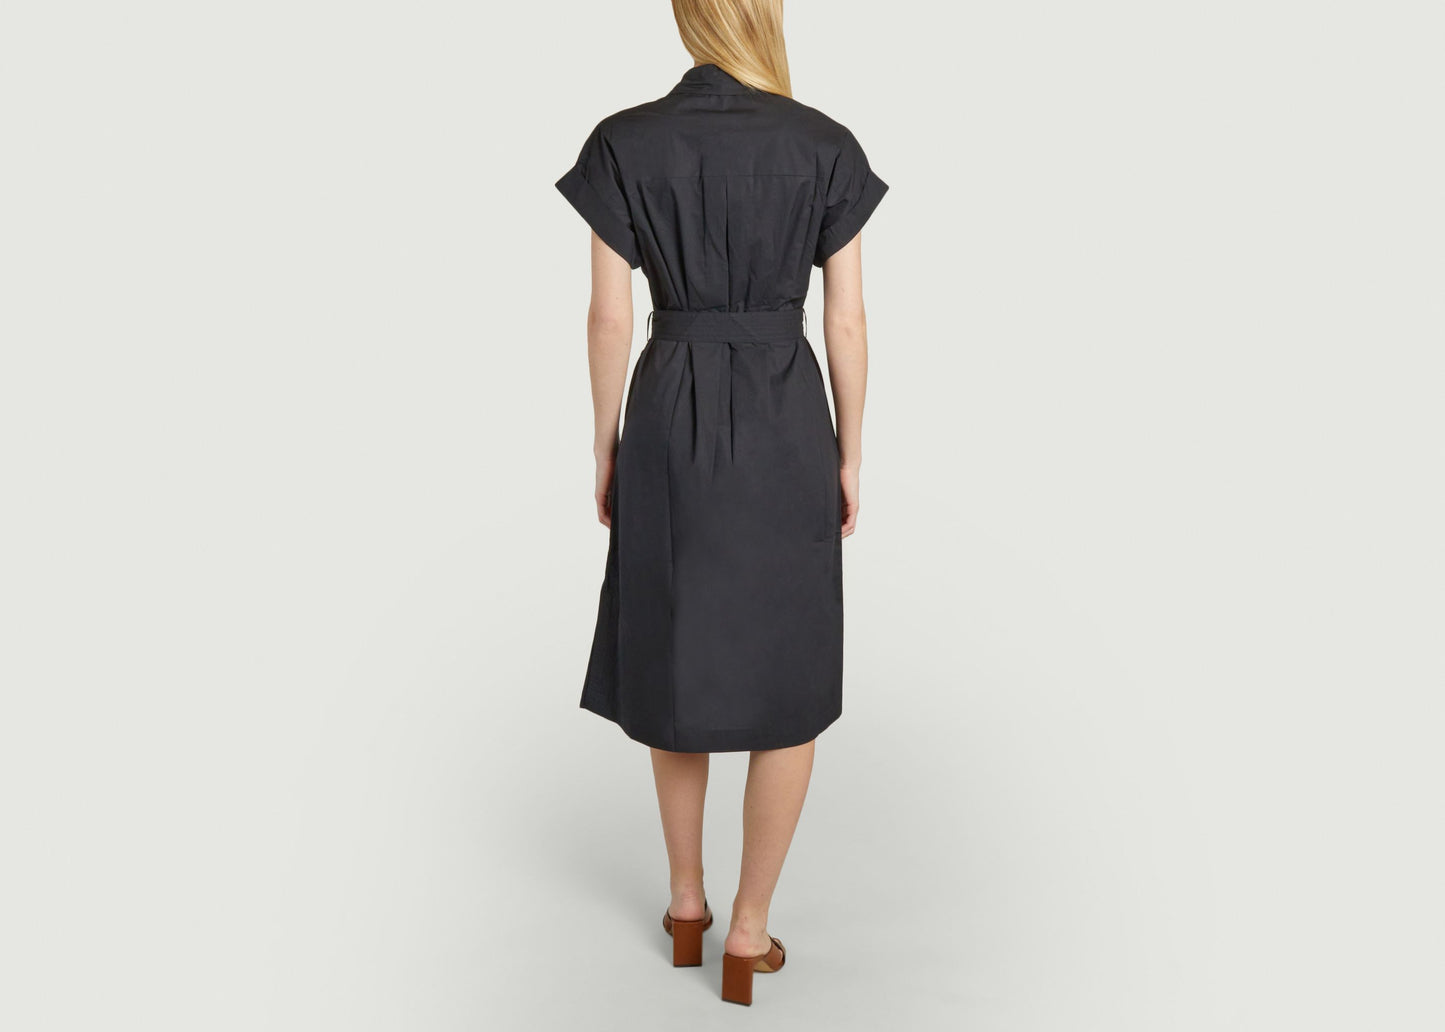 Cloe Black Shirt Dress